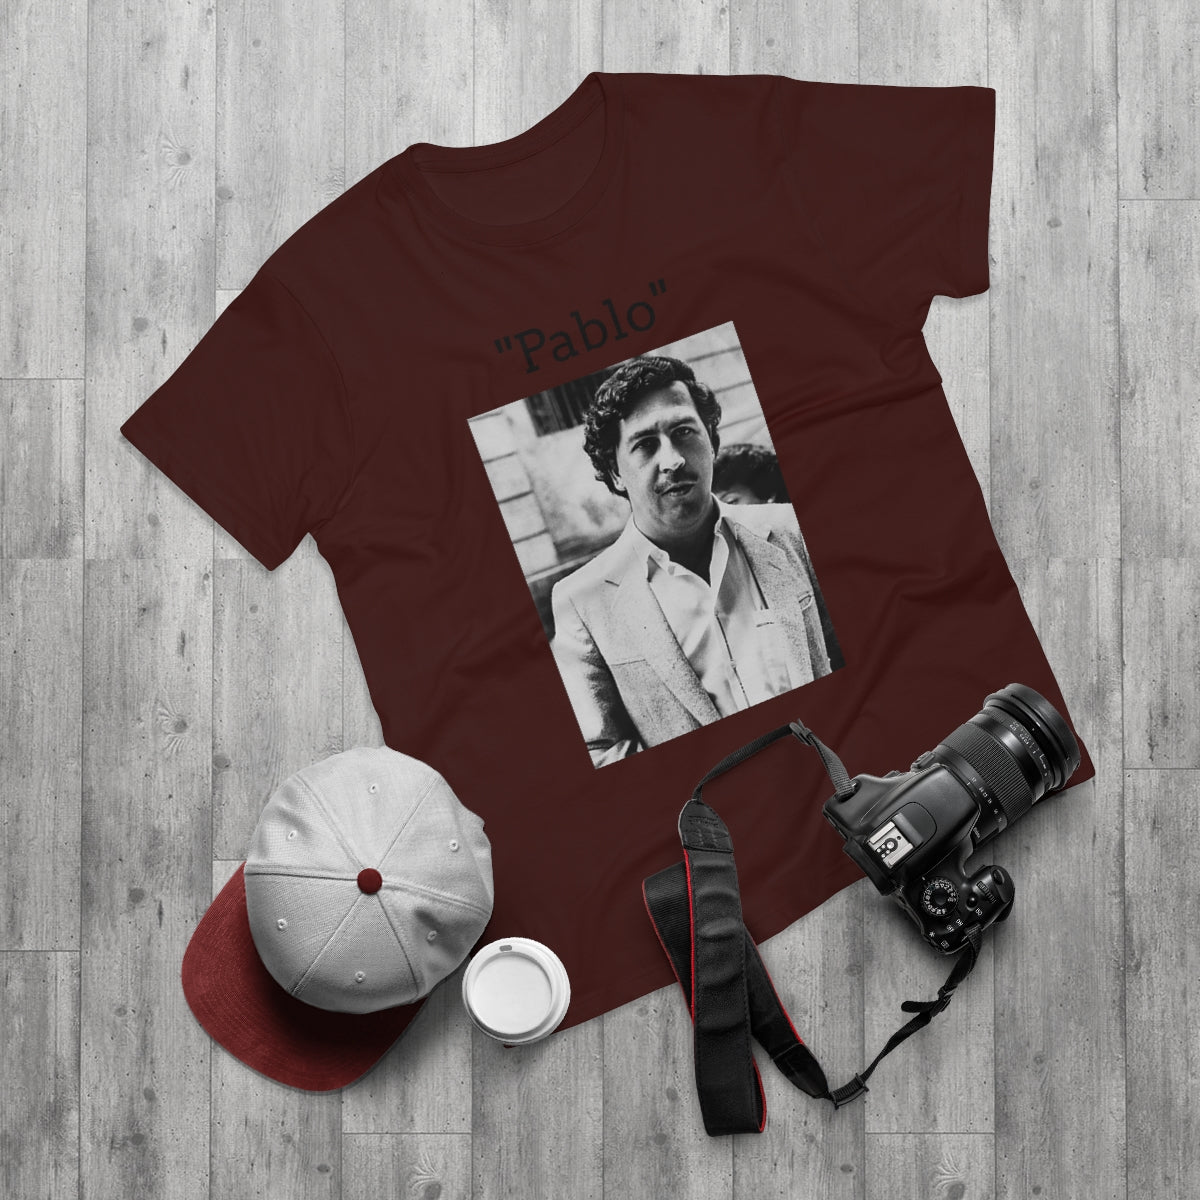 "Pablo" "King of coke" Men's T-shirt